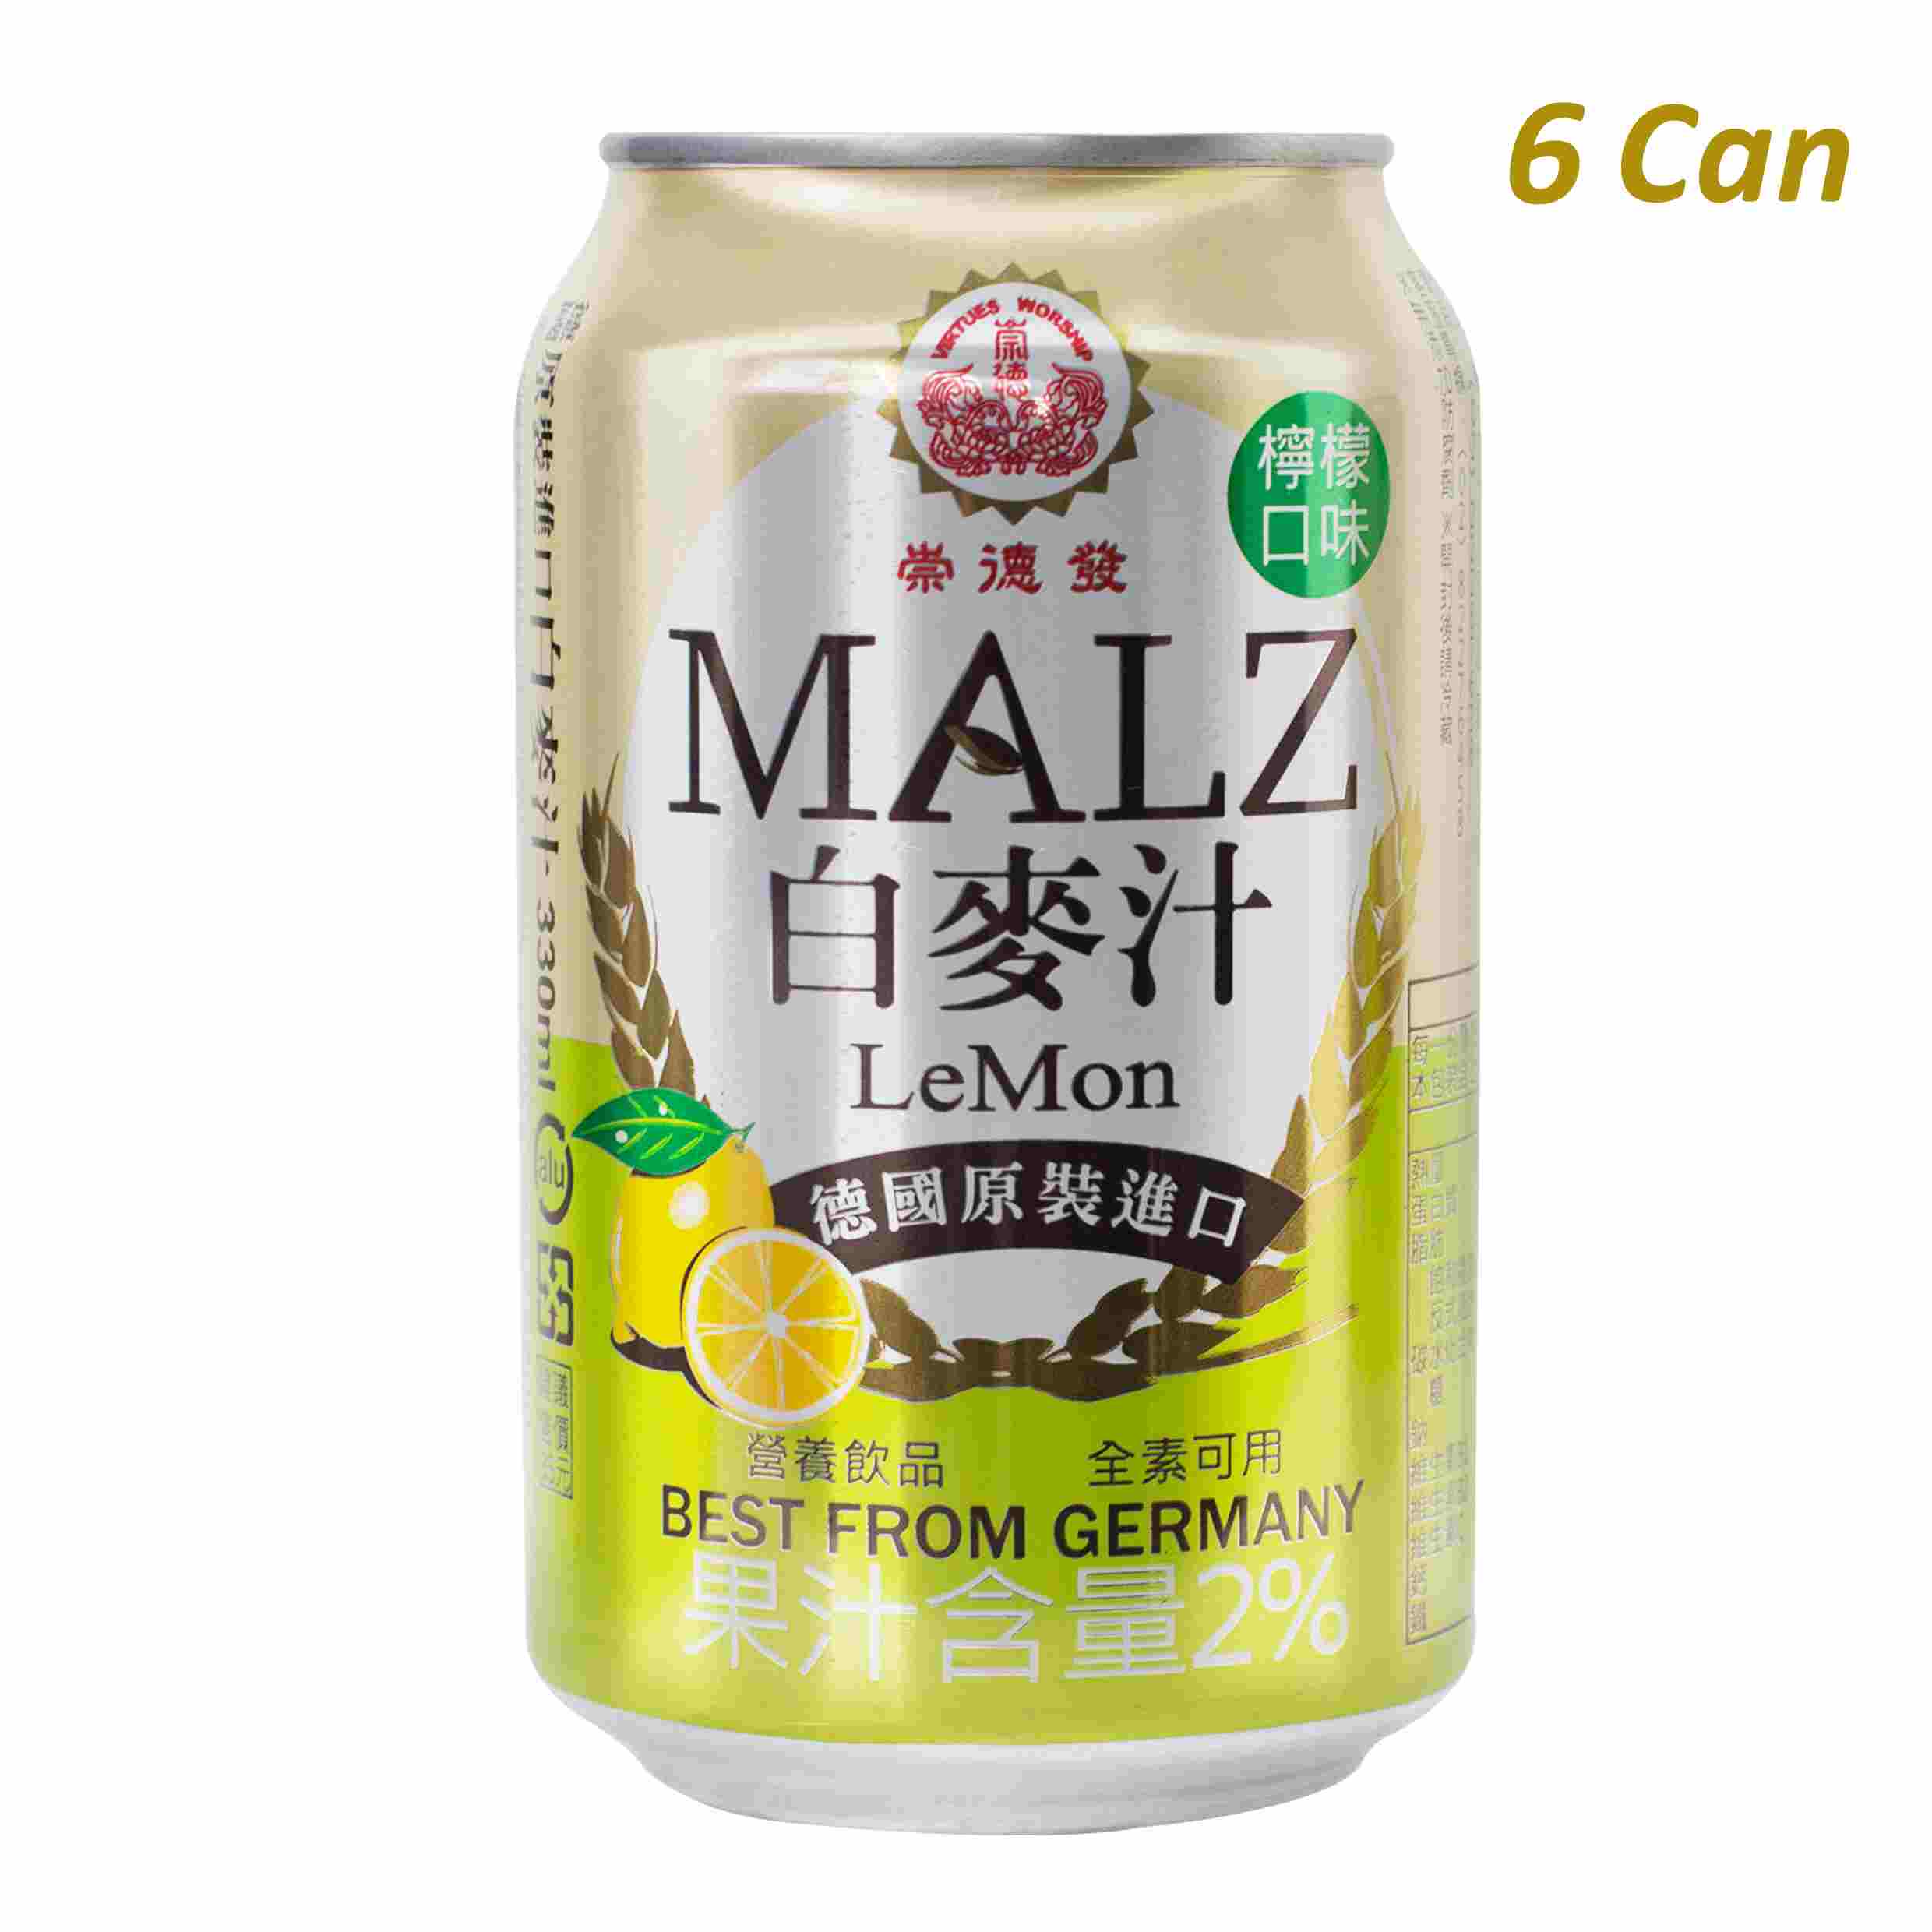 Image Lemon MALZ 崇德发 - 柠檬白麦汁(铁罐) (330ml x 6can)